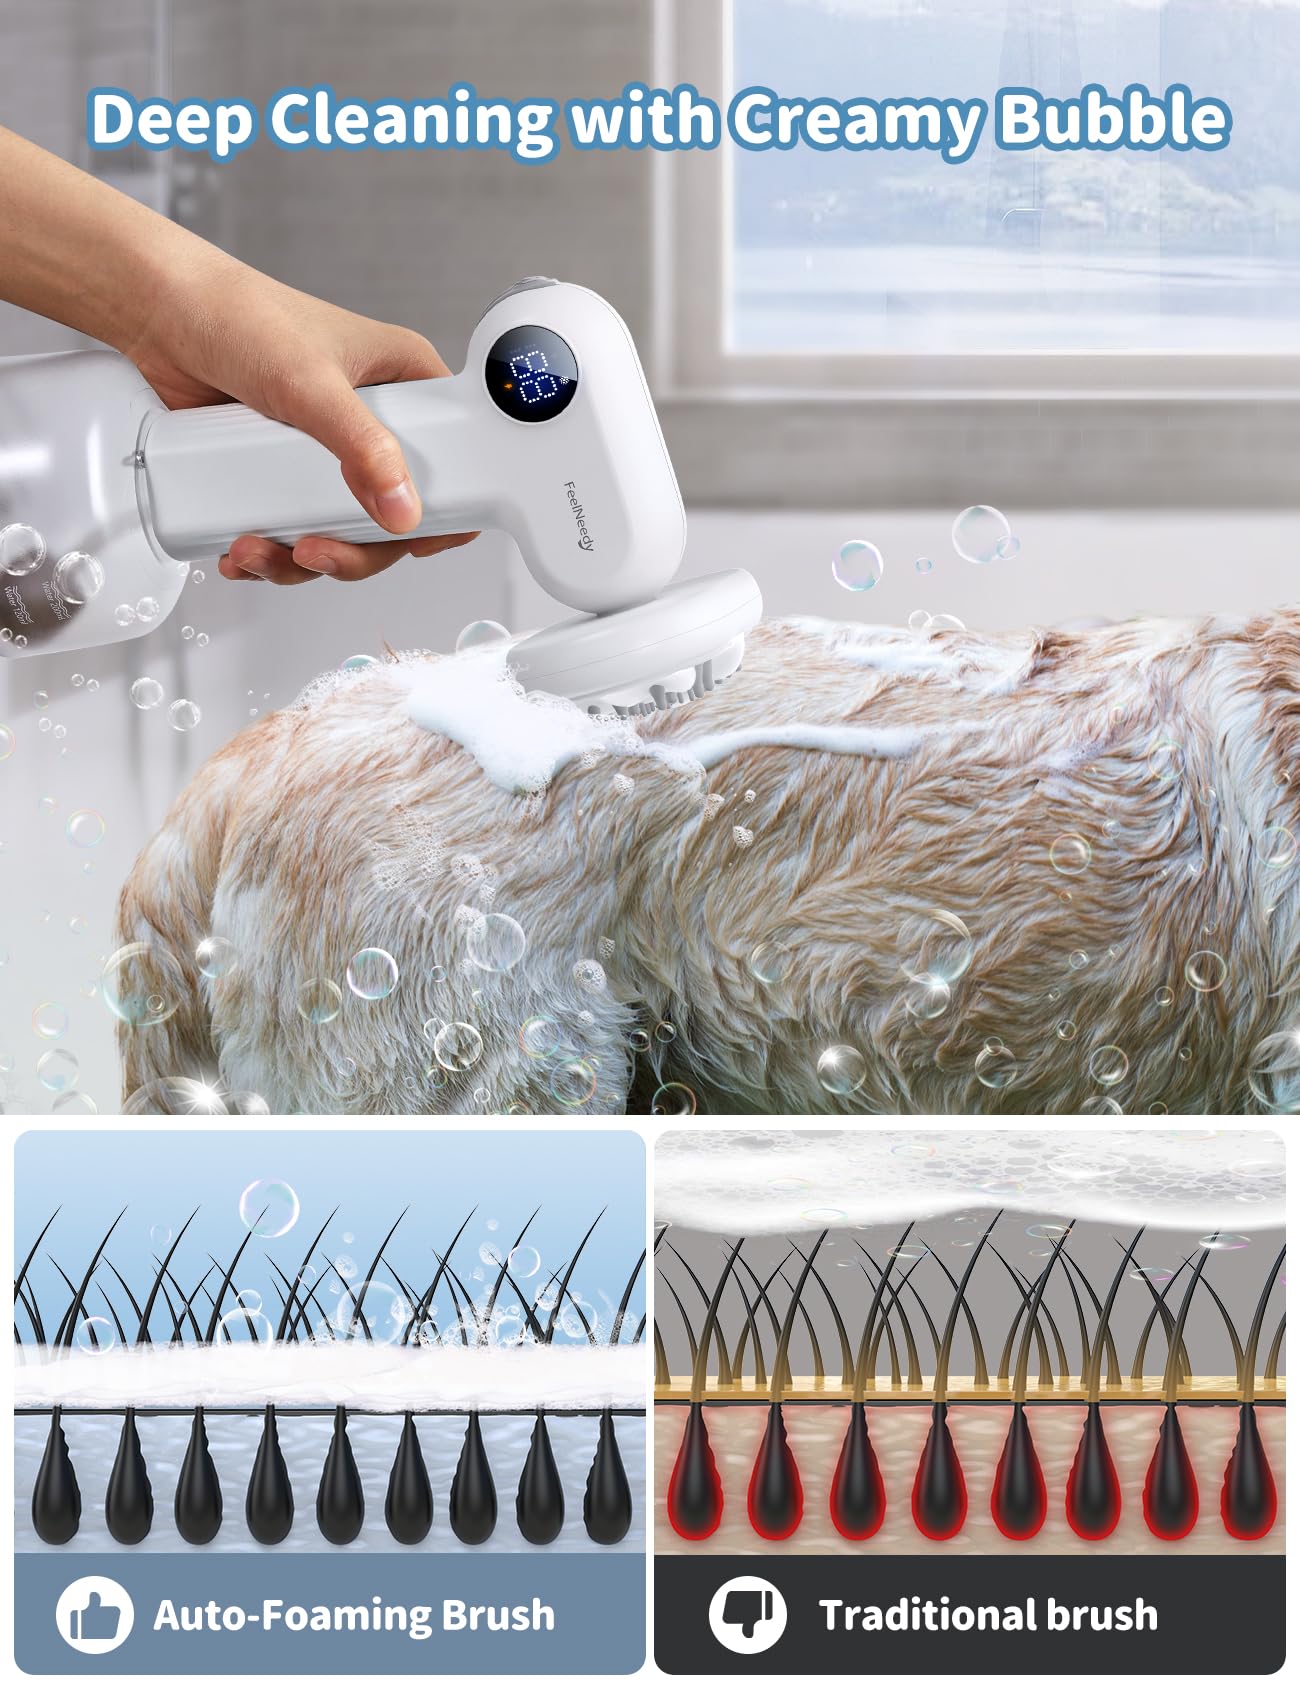 FEELNEEDY Automatic Foaming Soap Dog Bath Brush, Foaming Dispenser with Soft Silicone Massage Dog Shampoo Brush, One-click Deep Cleaning Dog Washing Brush for Short and Long Haired Pet, White